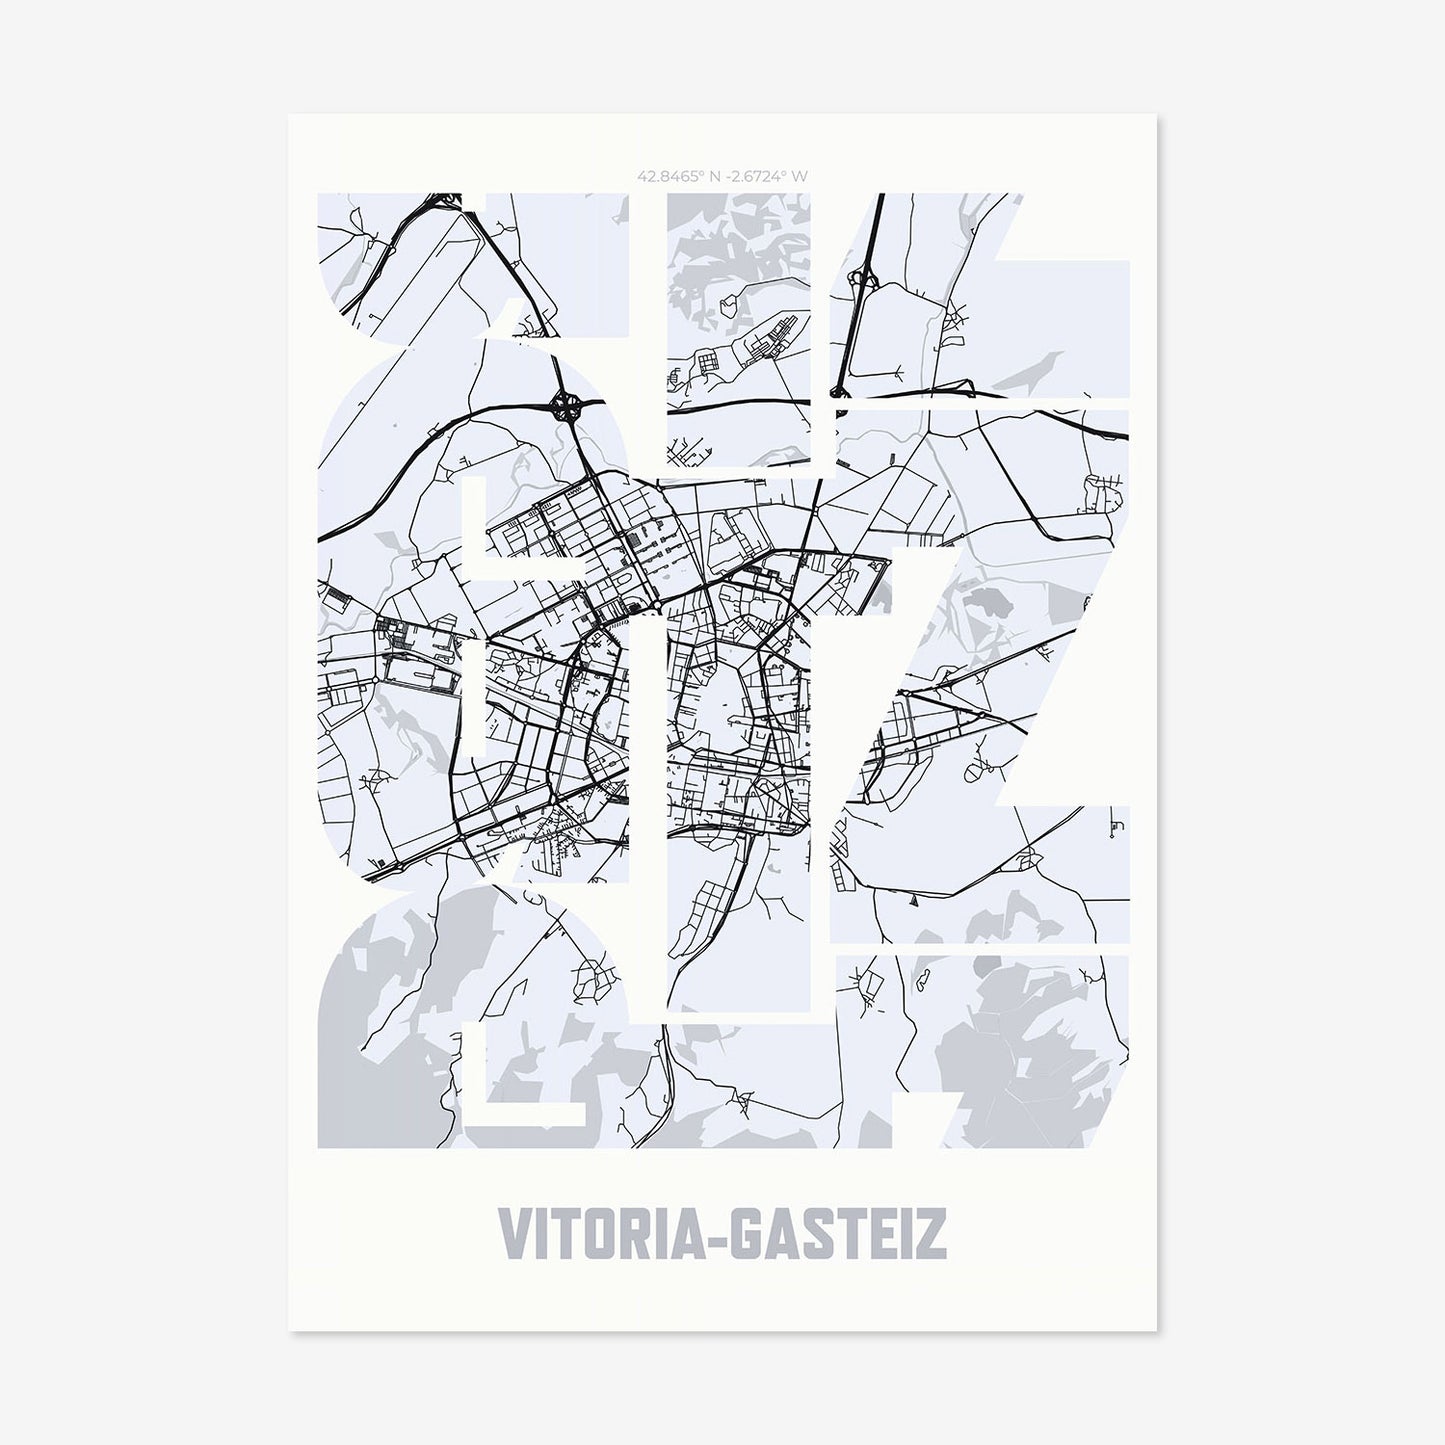 GTZ Vitoria-Gasteiz Poster